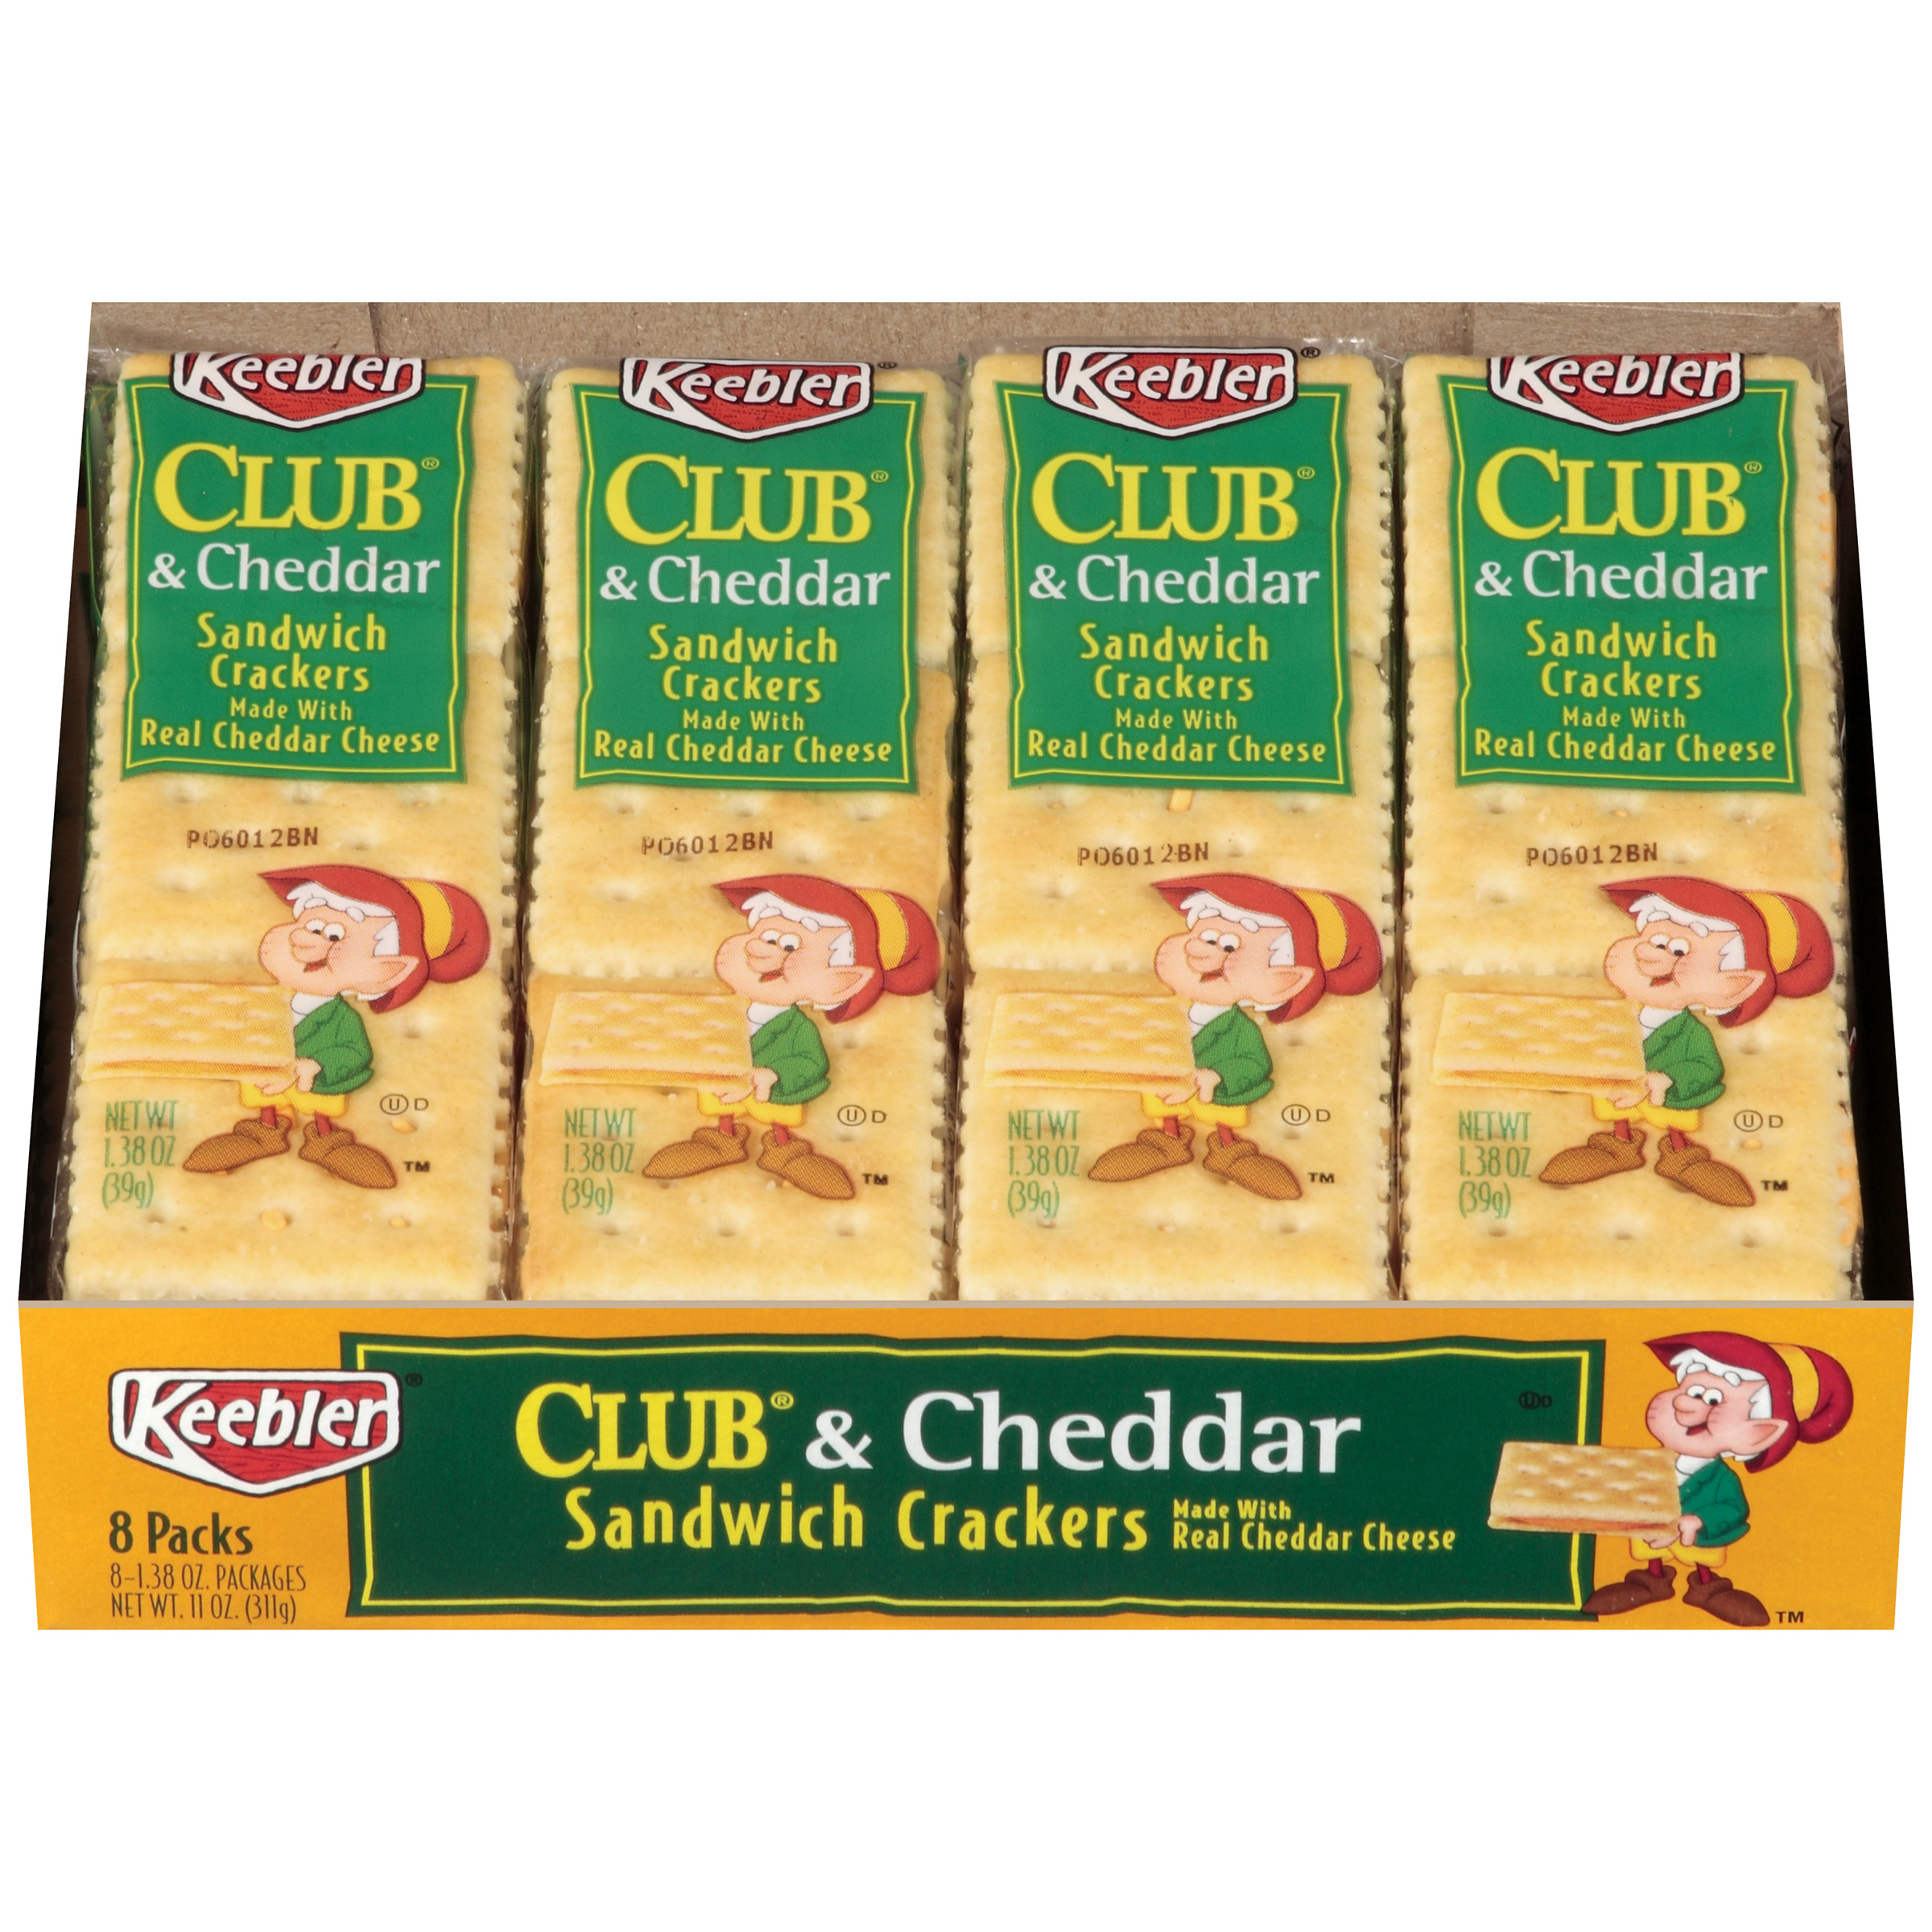 Keebler Sandwich Crackers Club & Cheddar - 8 PK Product Image